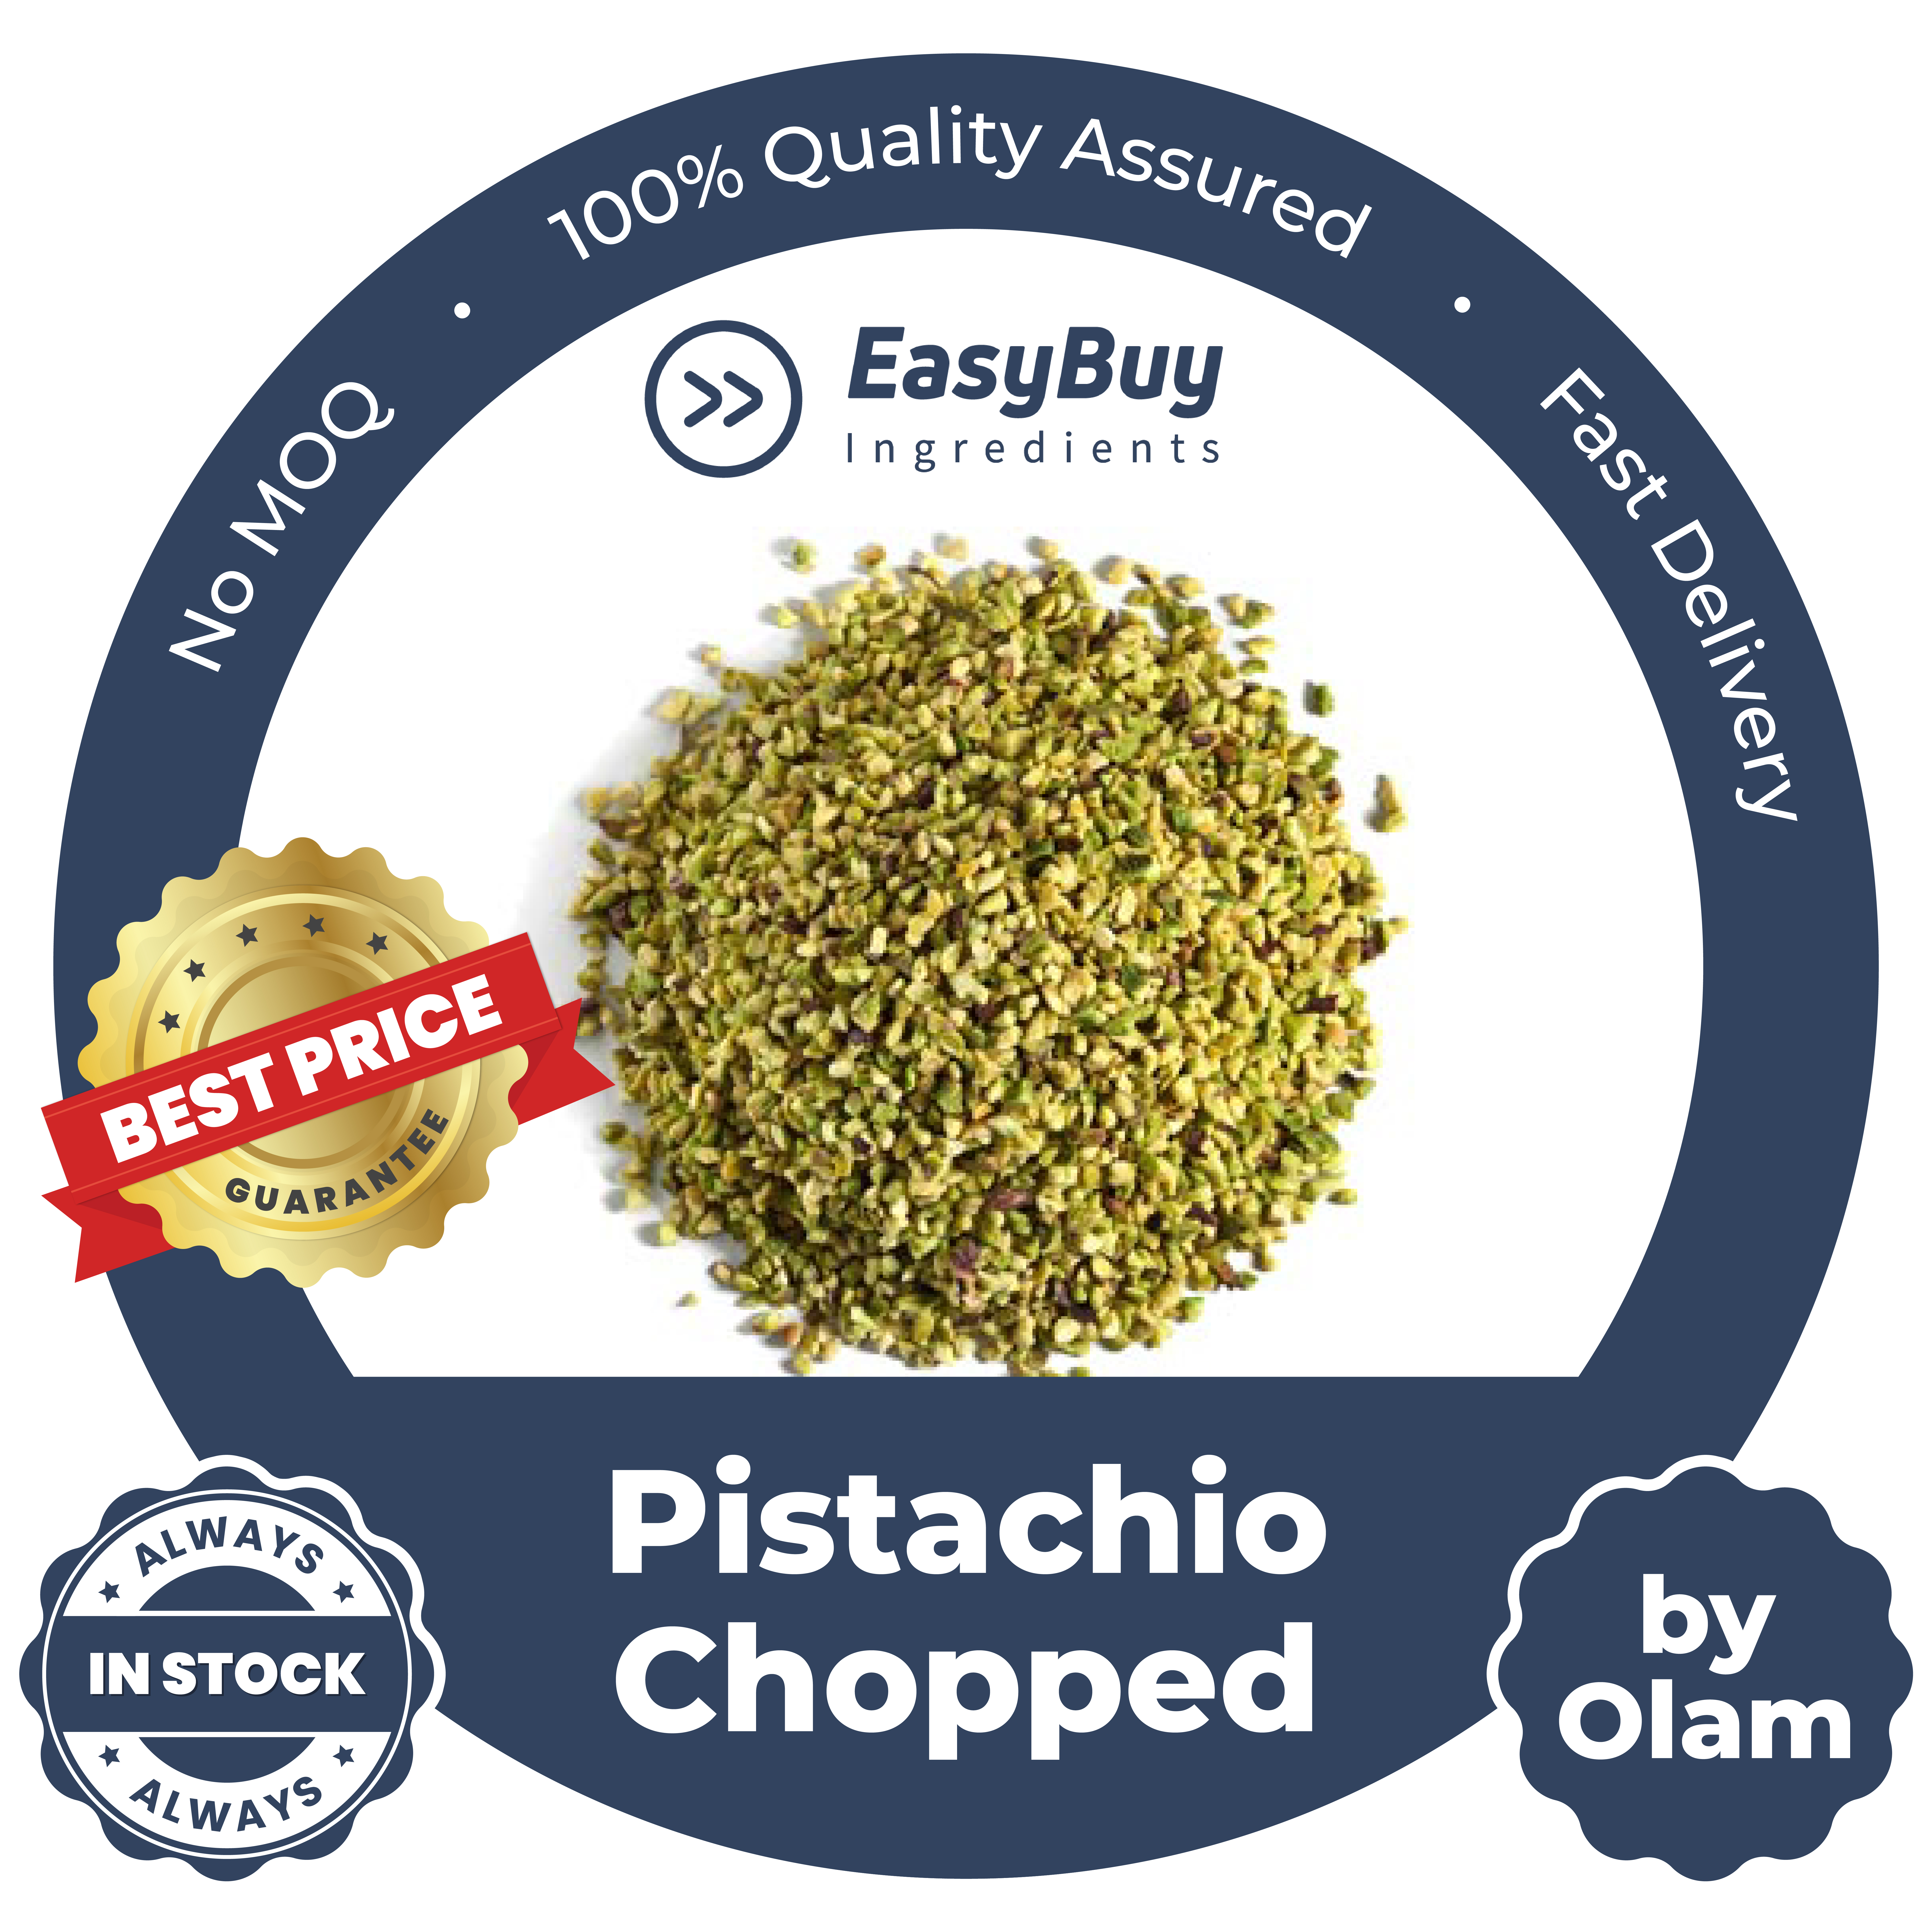 Pistachio Chopped by Olam